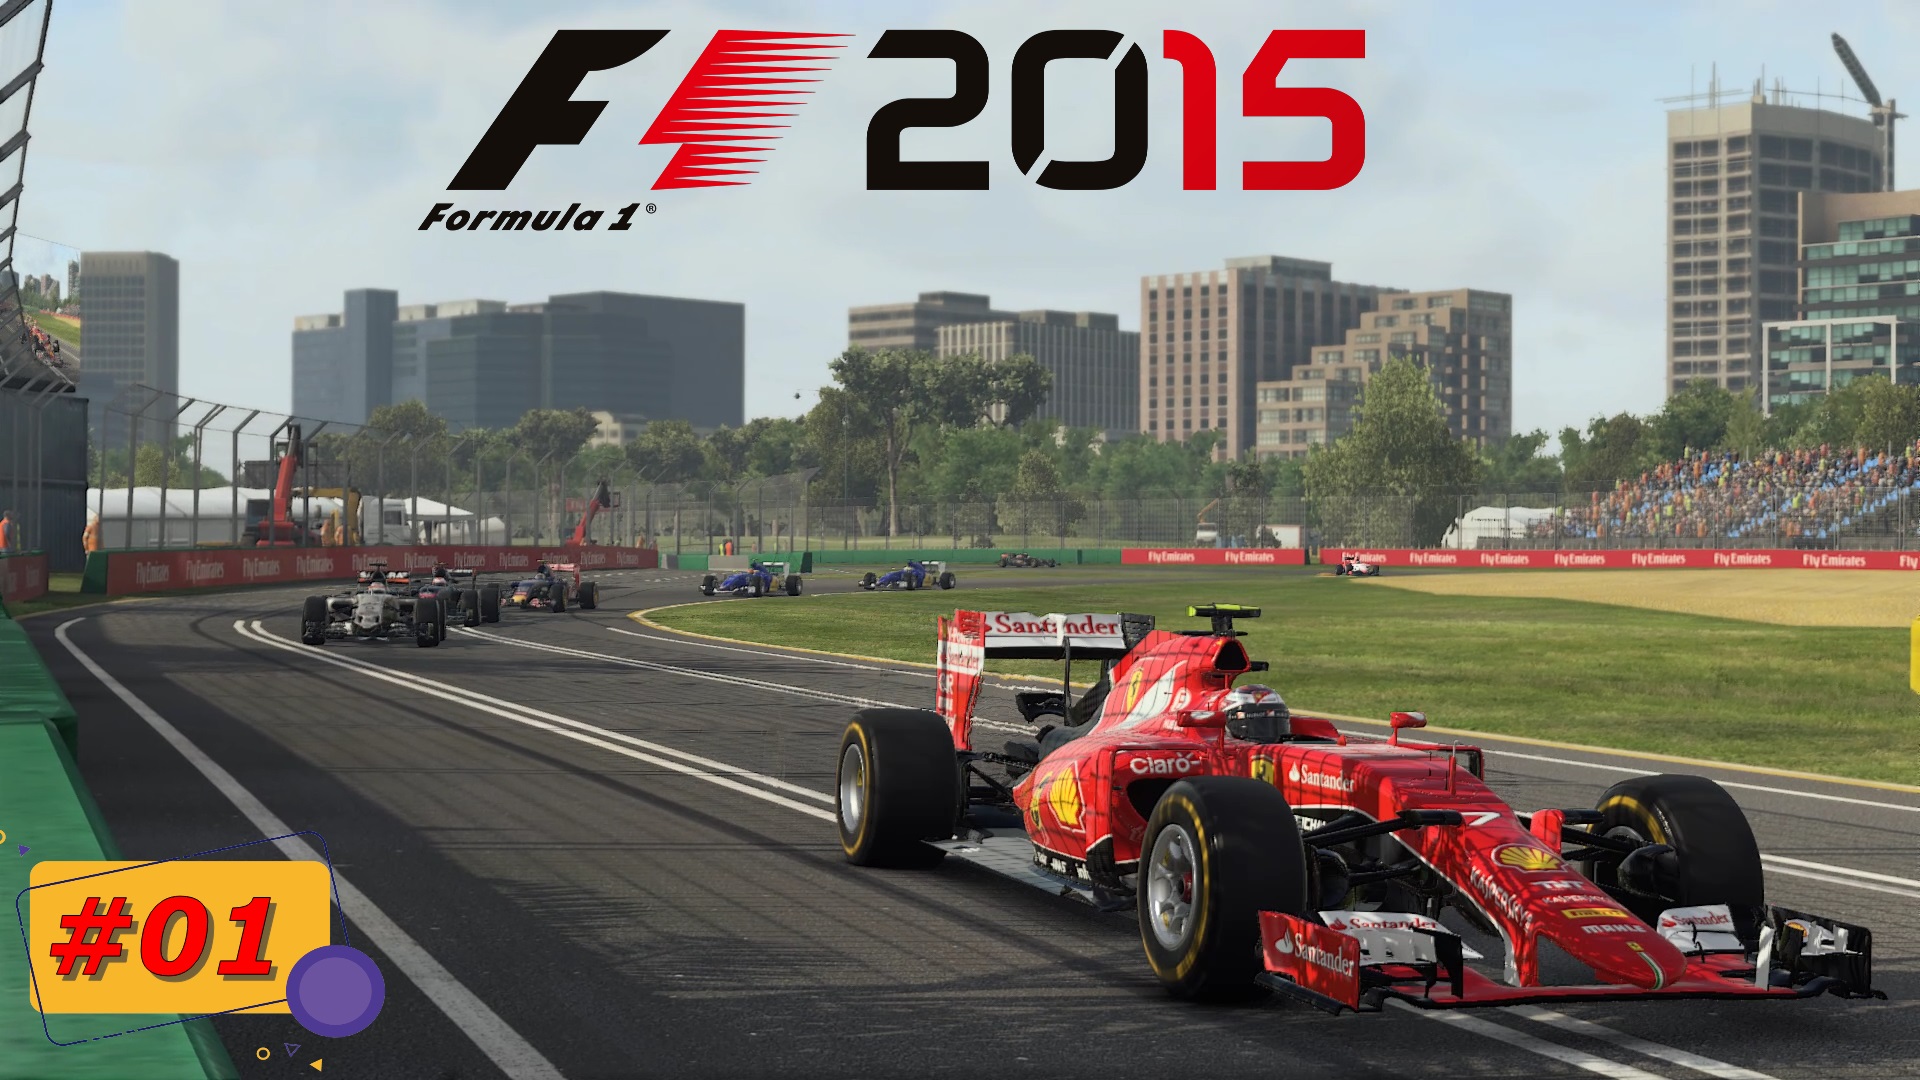 Scuderia Ferrari - #01 Melbourne | F1 2015 - Режим Чемпионата | Logitech G29